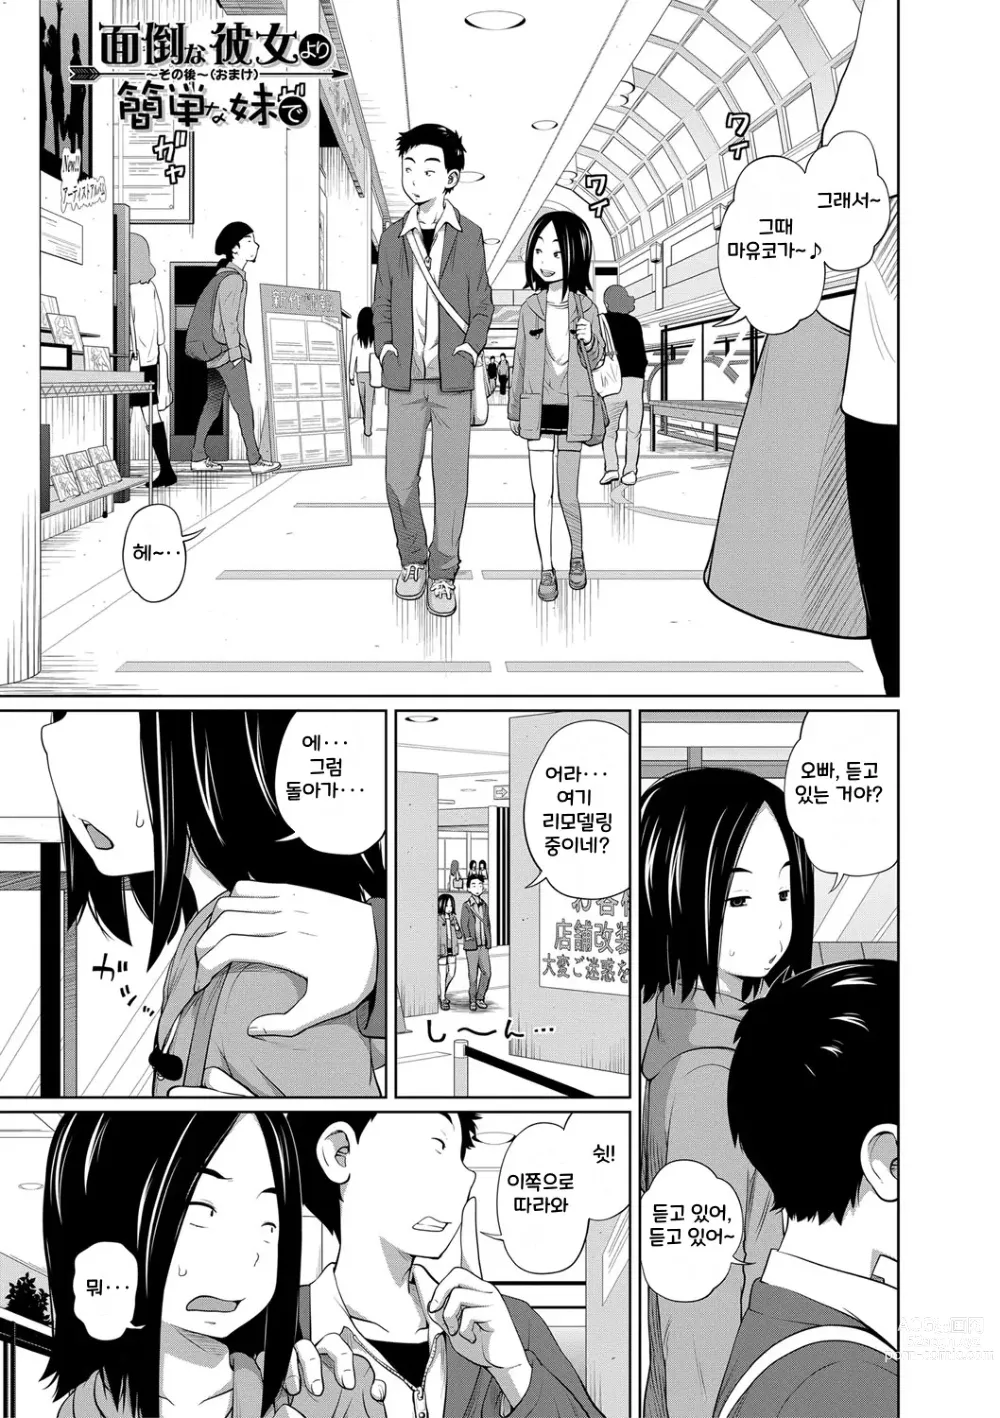 Page 194 of manga Imouto Access - Sister Access